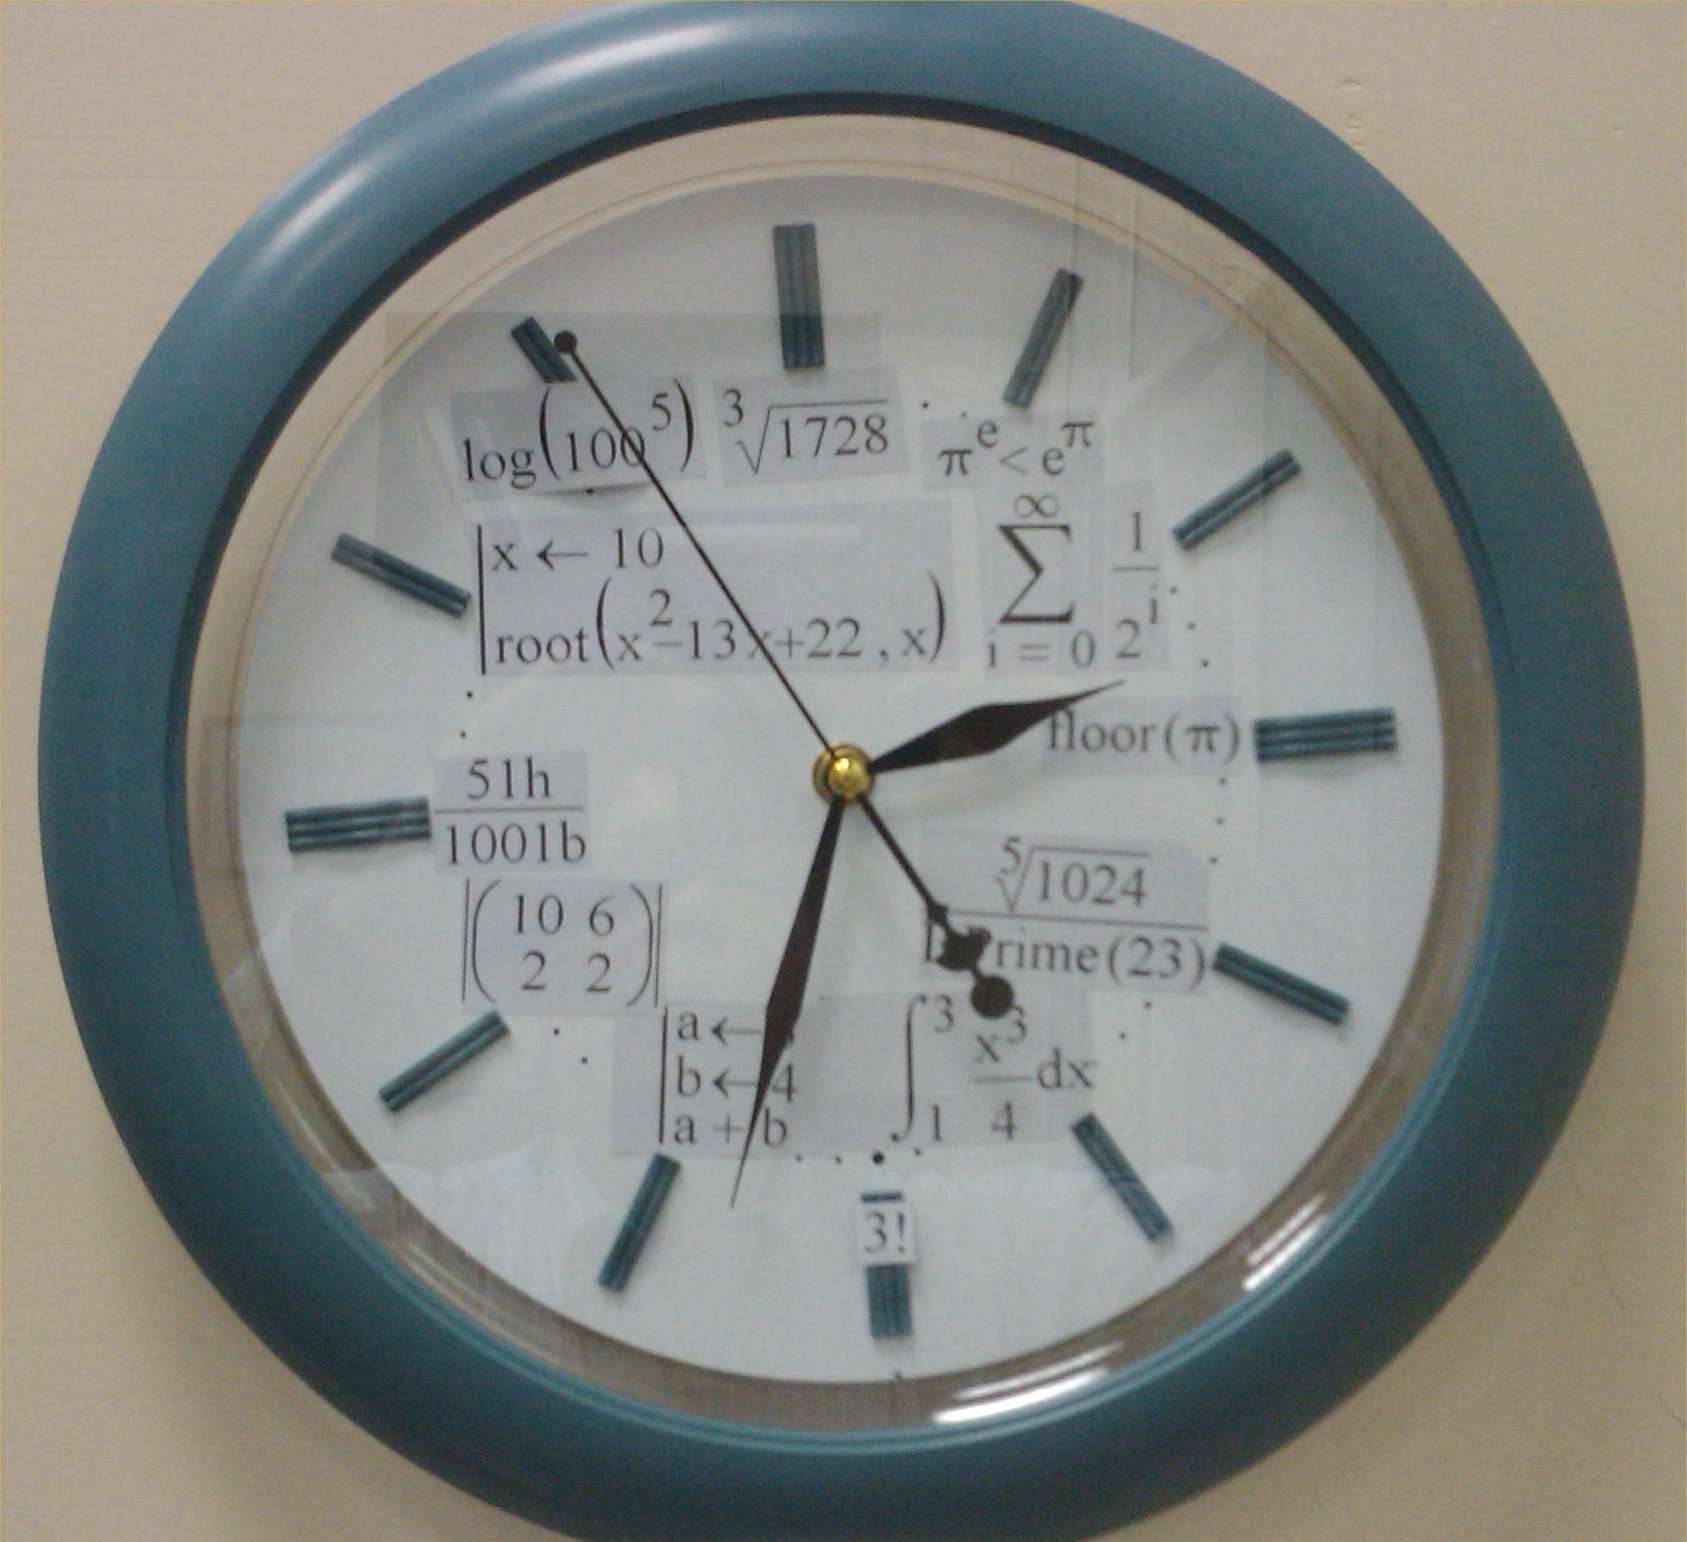 Mathcad-Clock.jpg